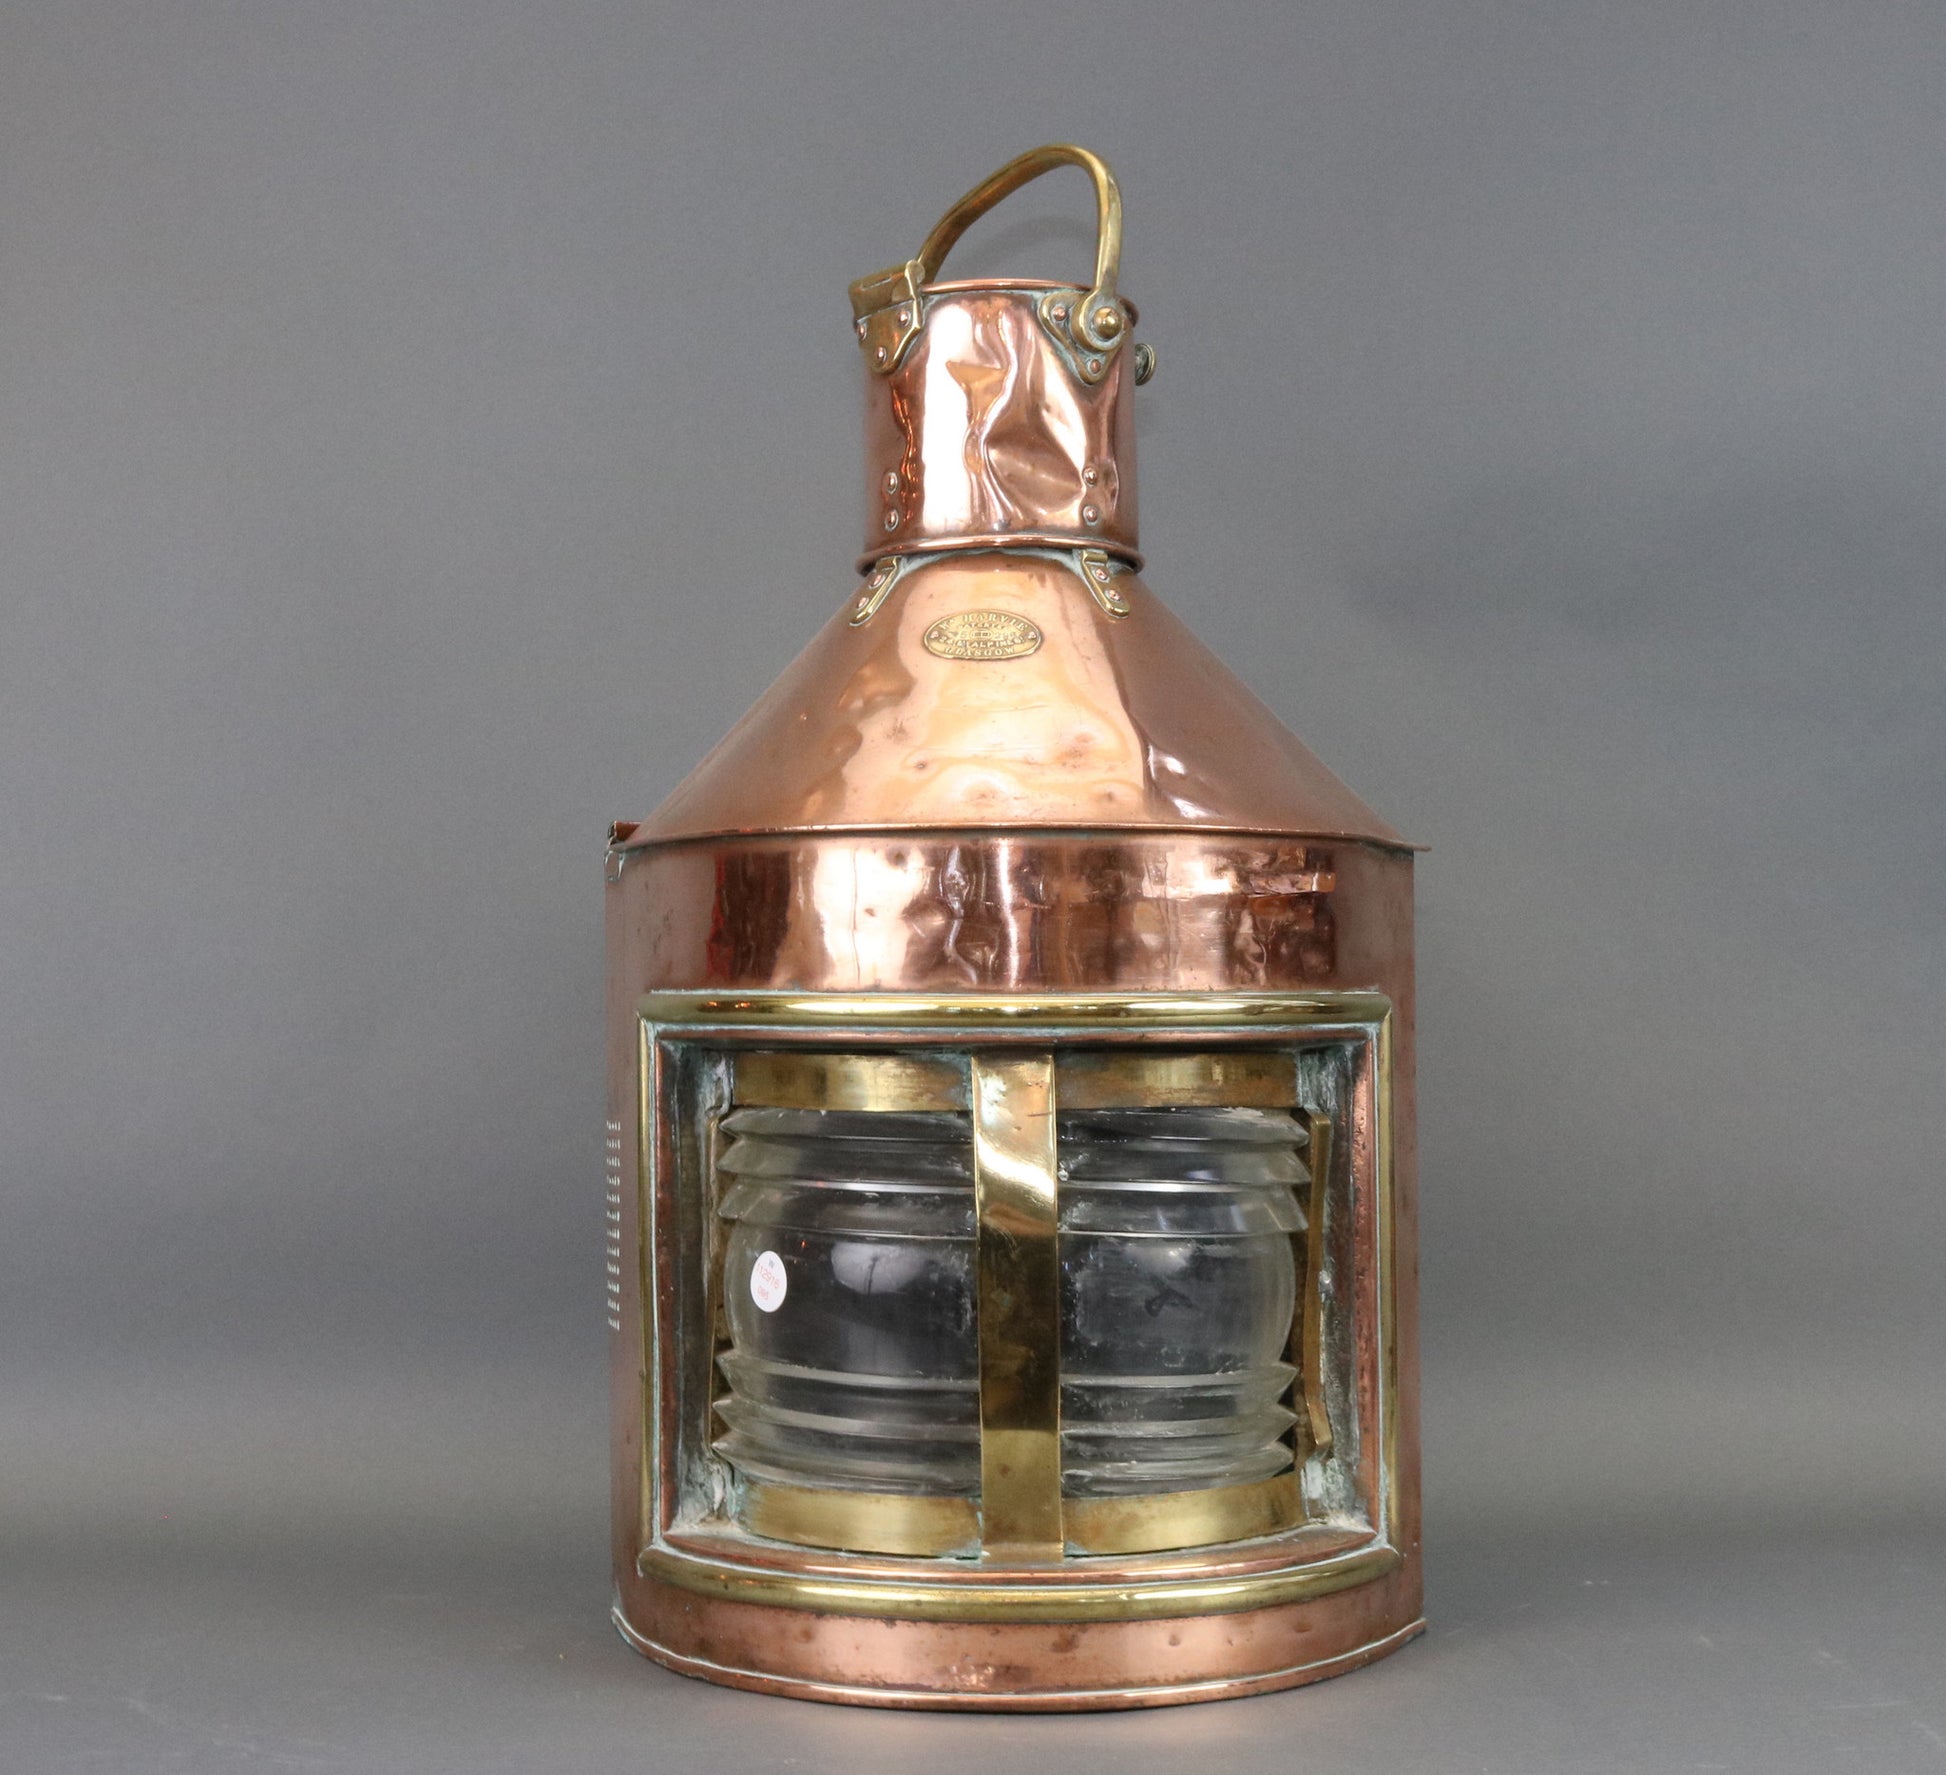 Solid Copper and Brass Starboard Lantern - Lannan Gallery